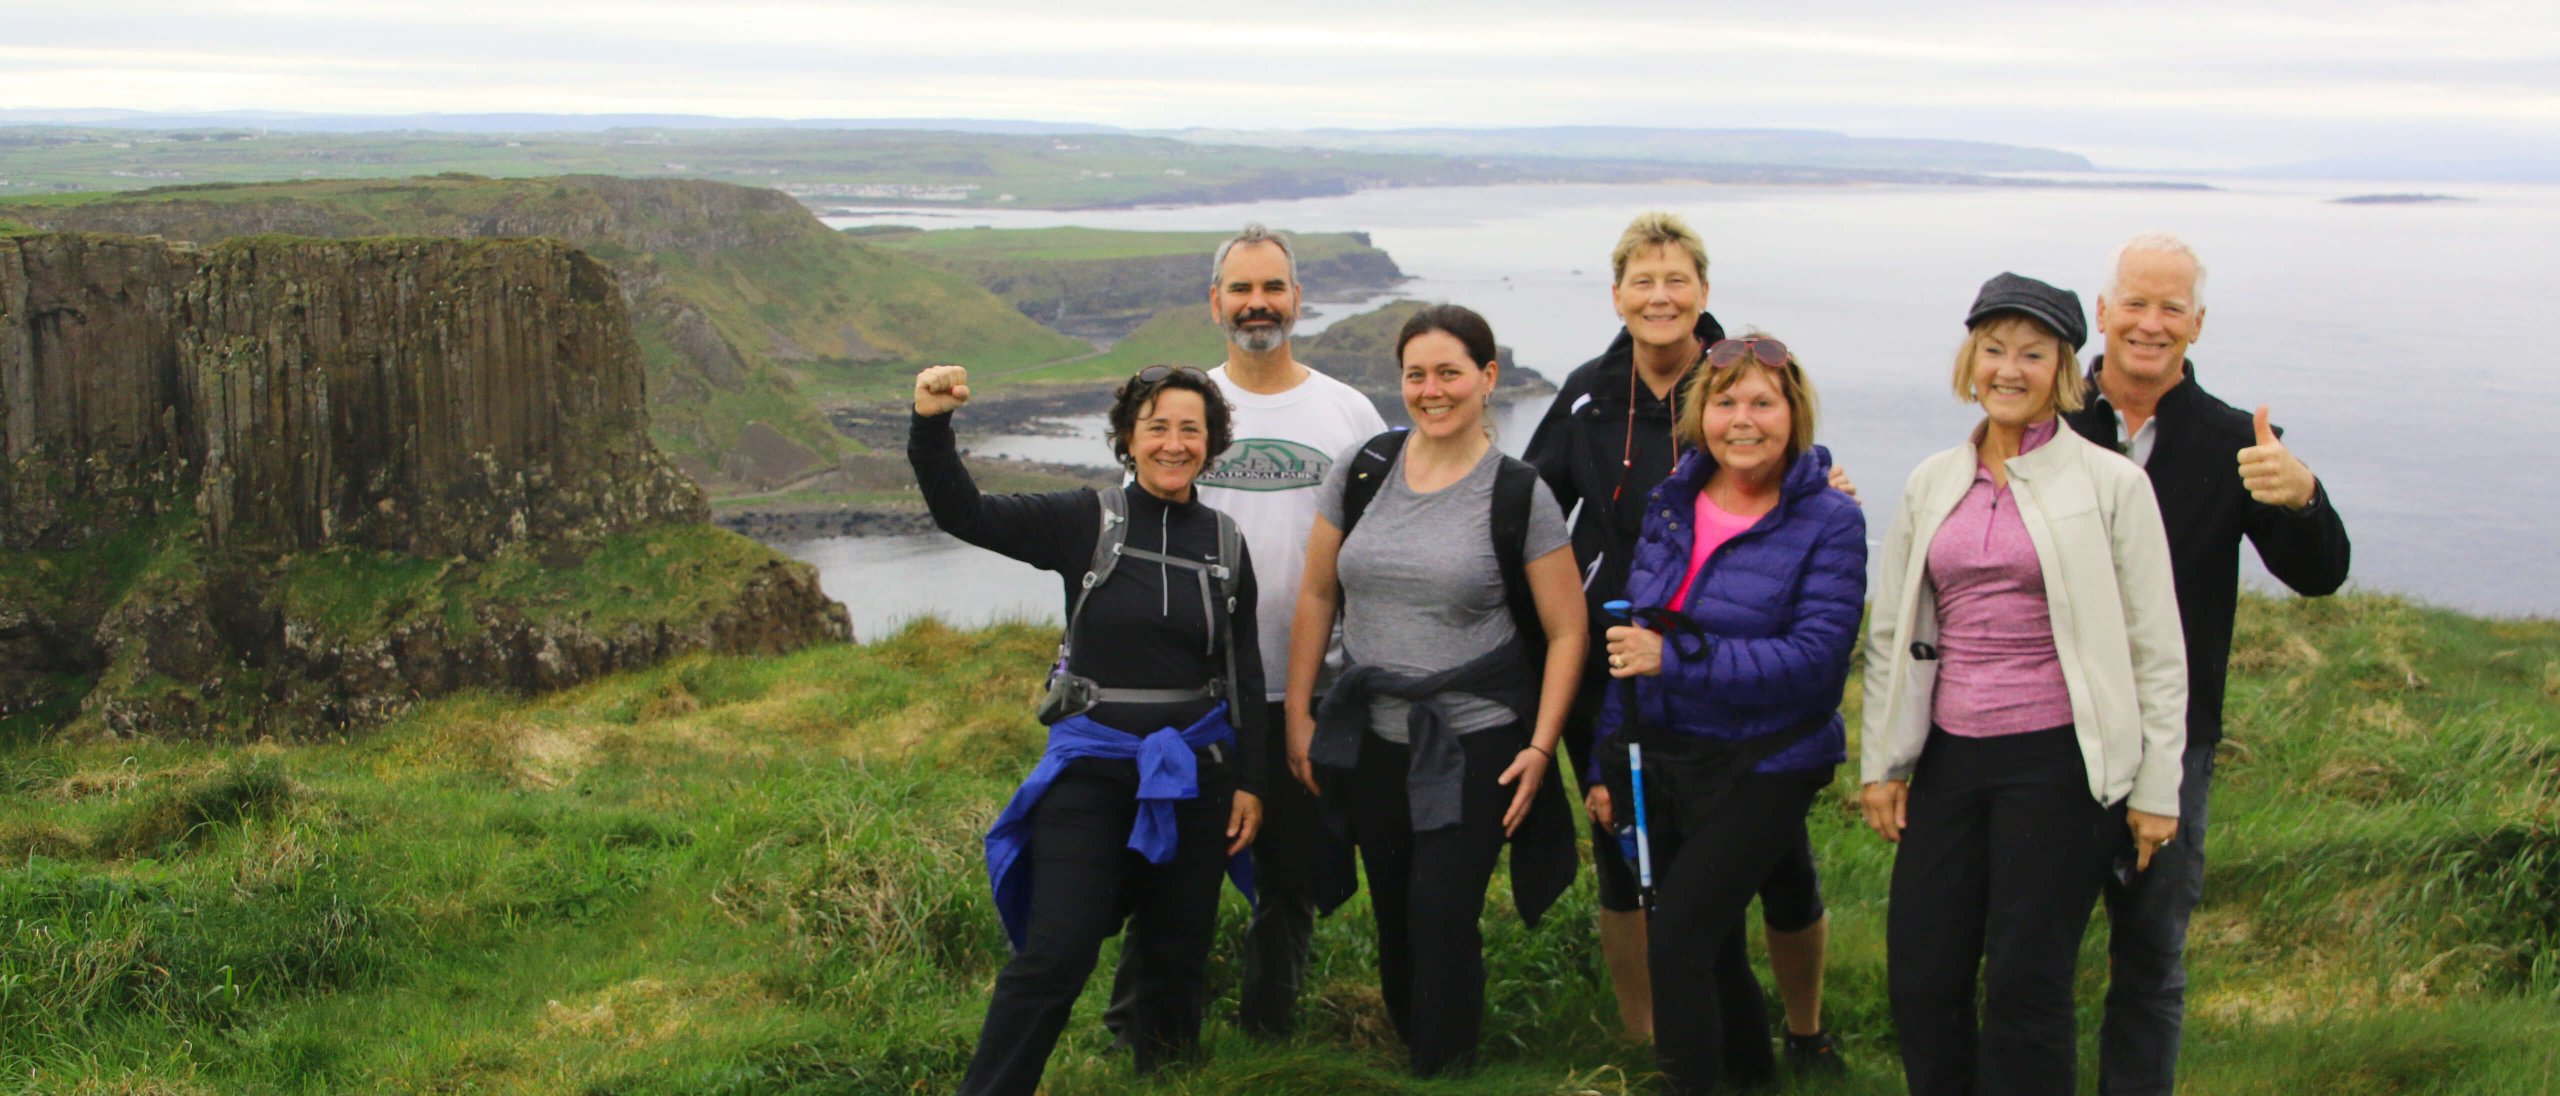 Vagabond Tours hiking group on Antrim coast in Ireland